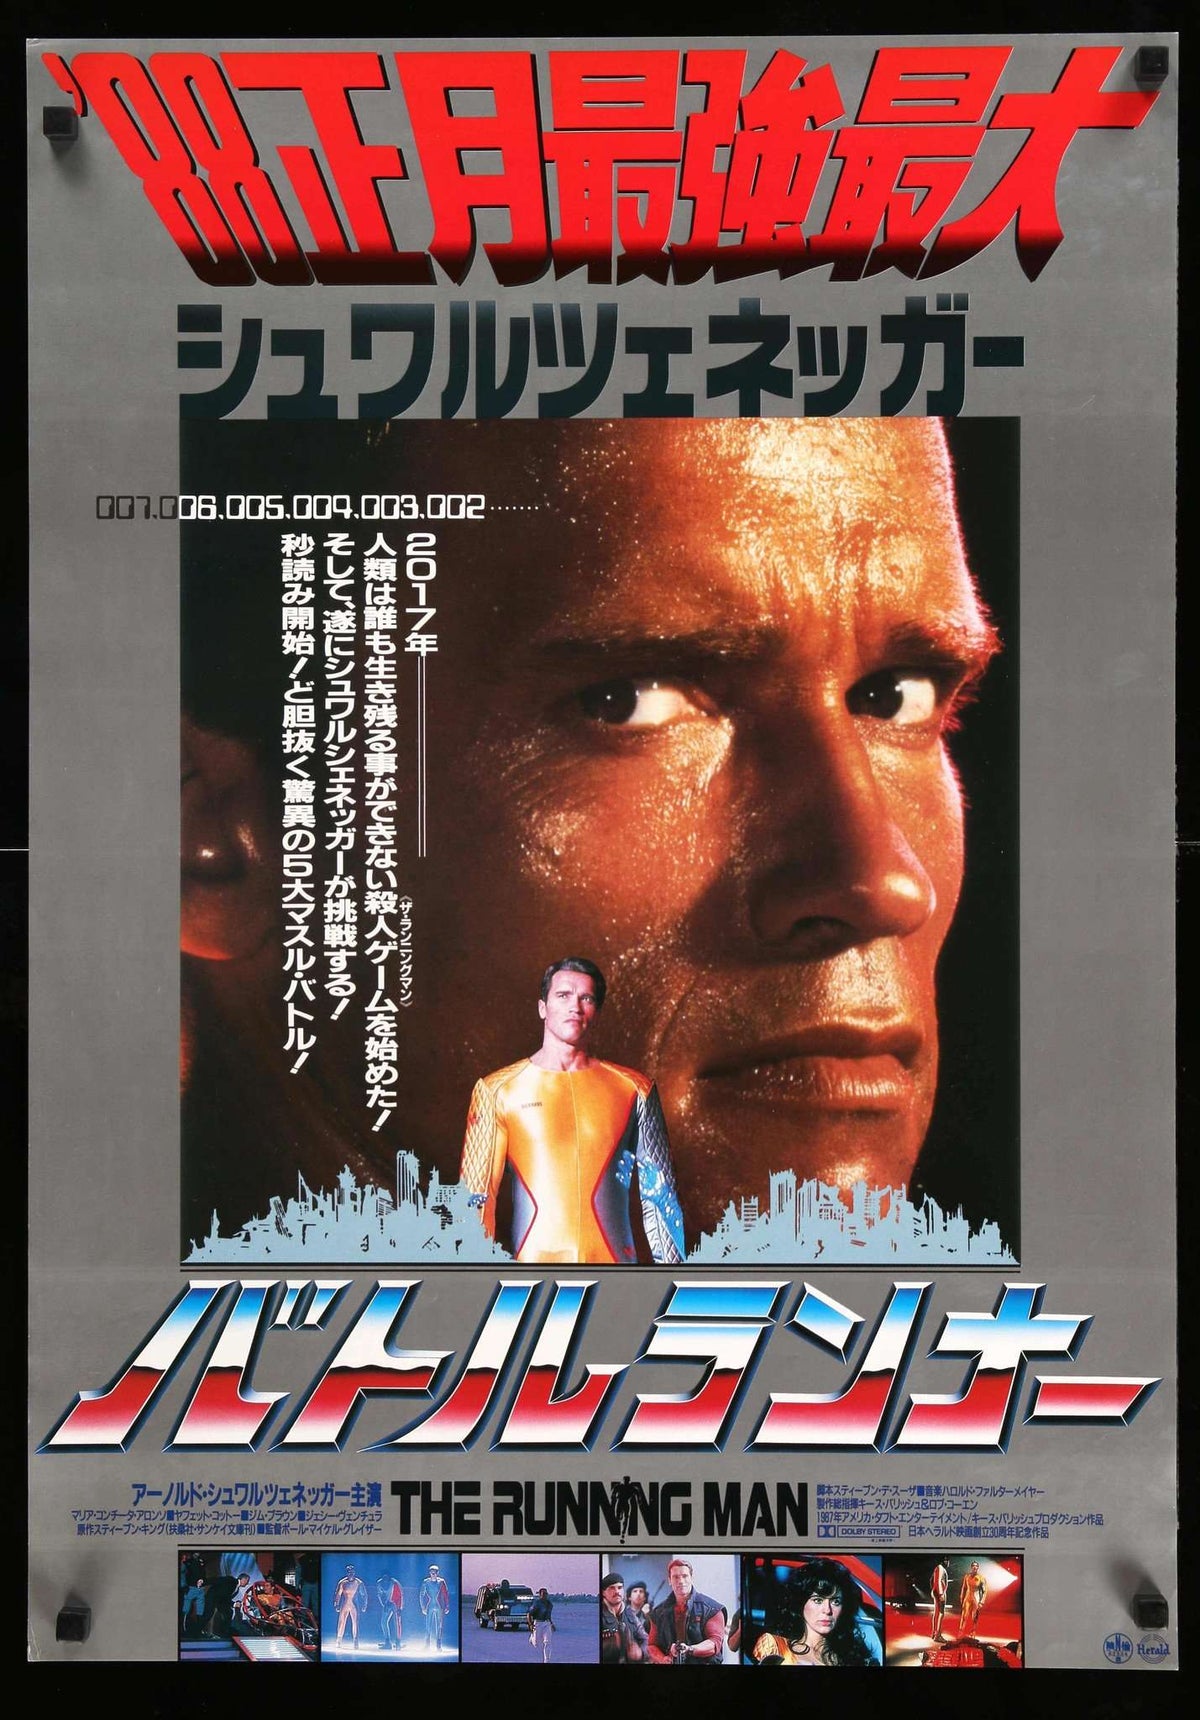 Running Man (1987) original movie poster for sale at Original Film Art